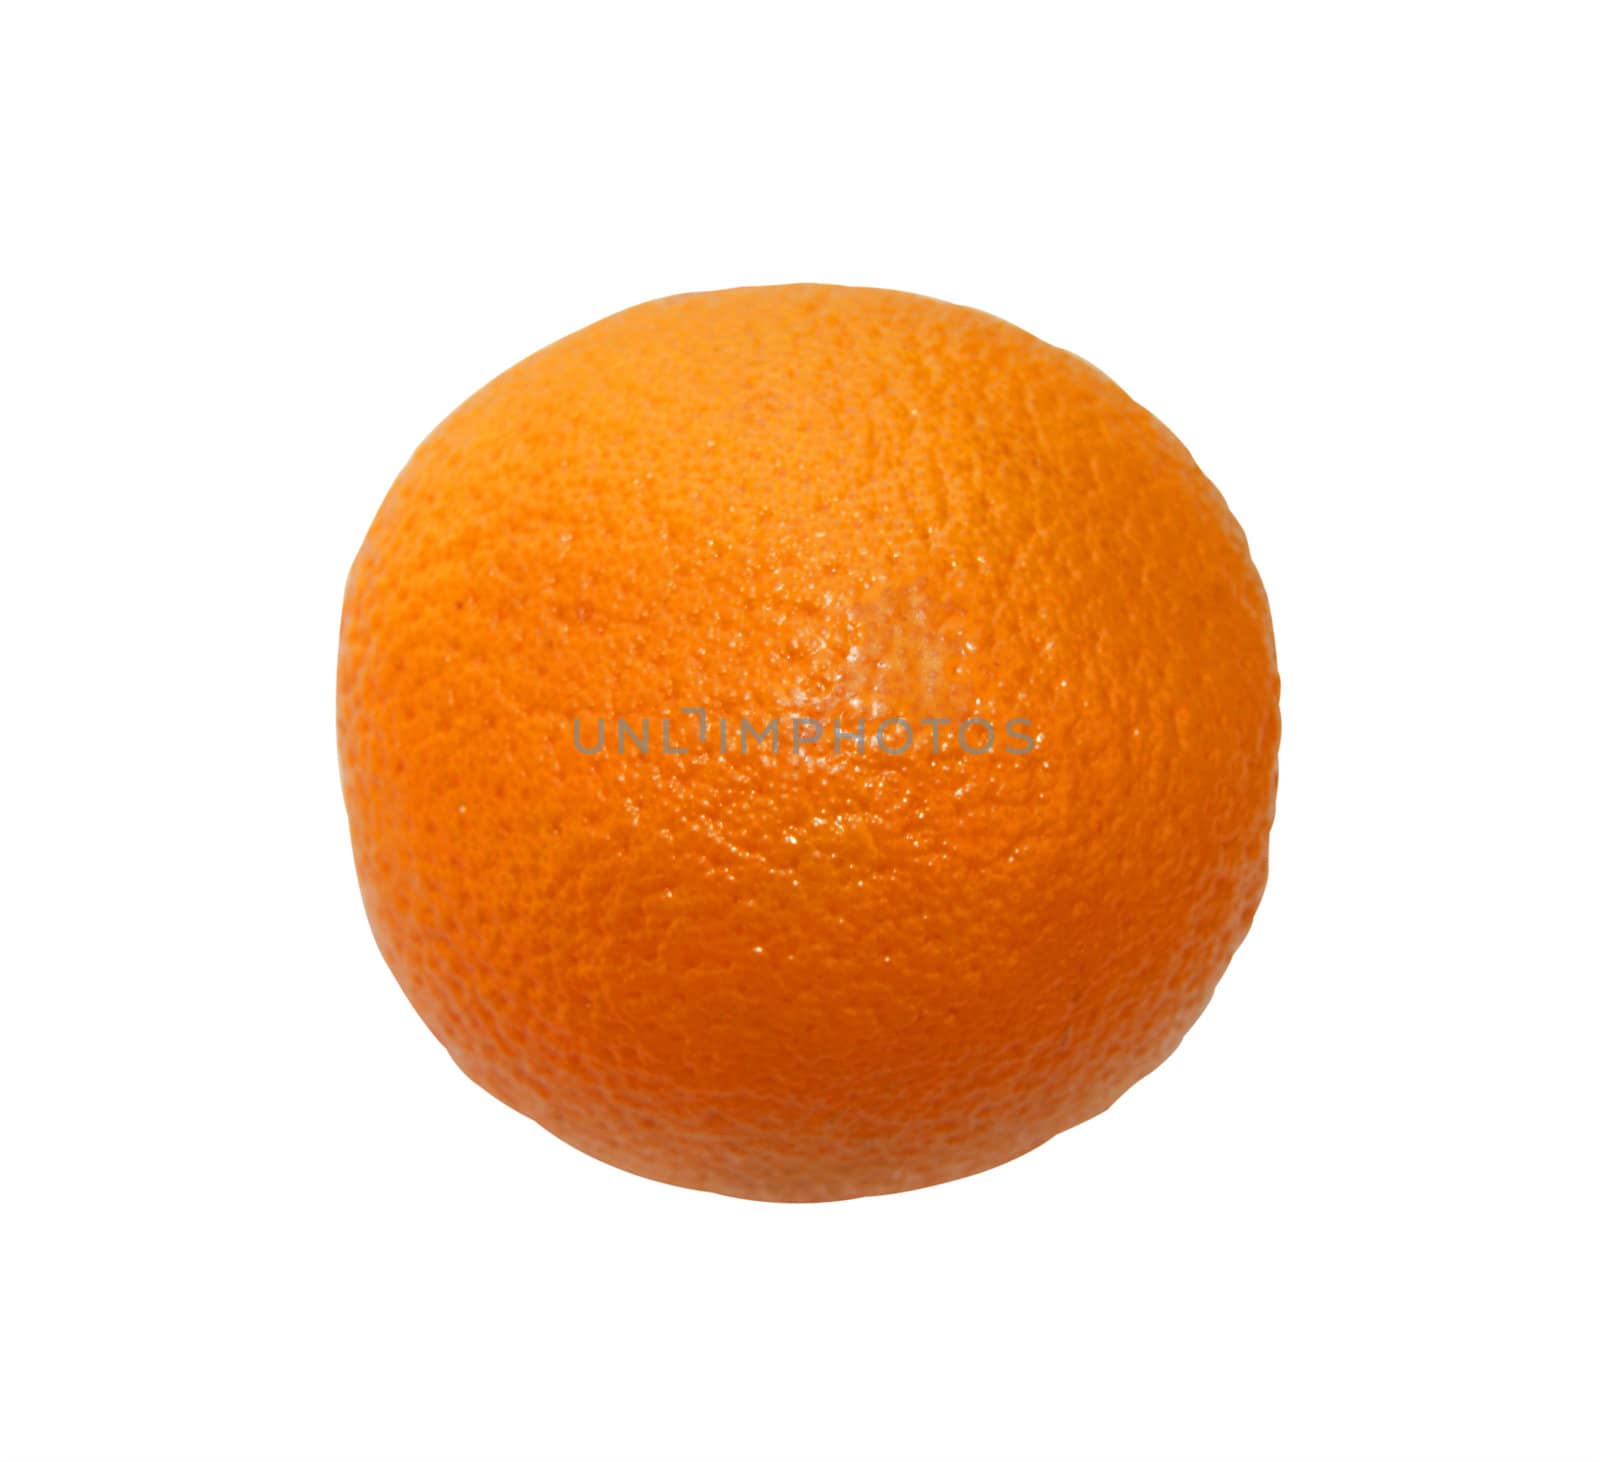 Ripe tangerine on white background by cobol1964